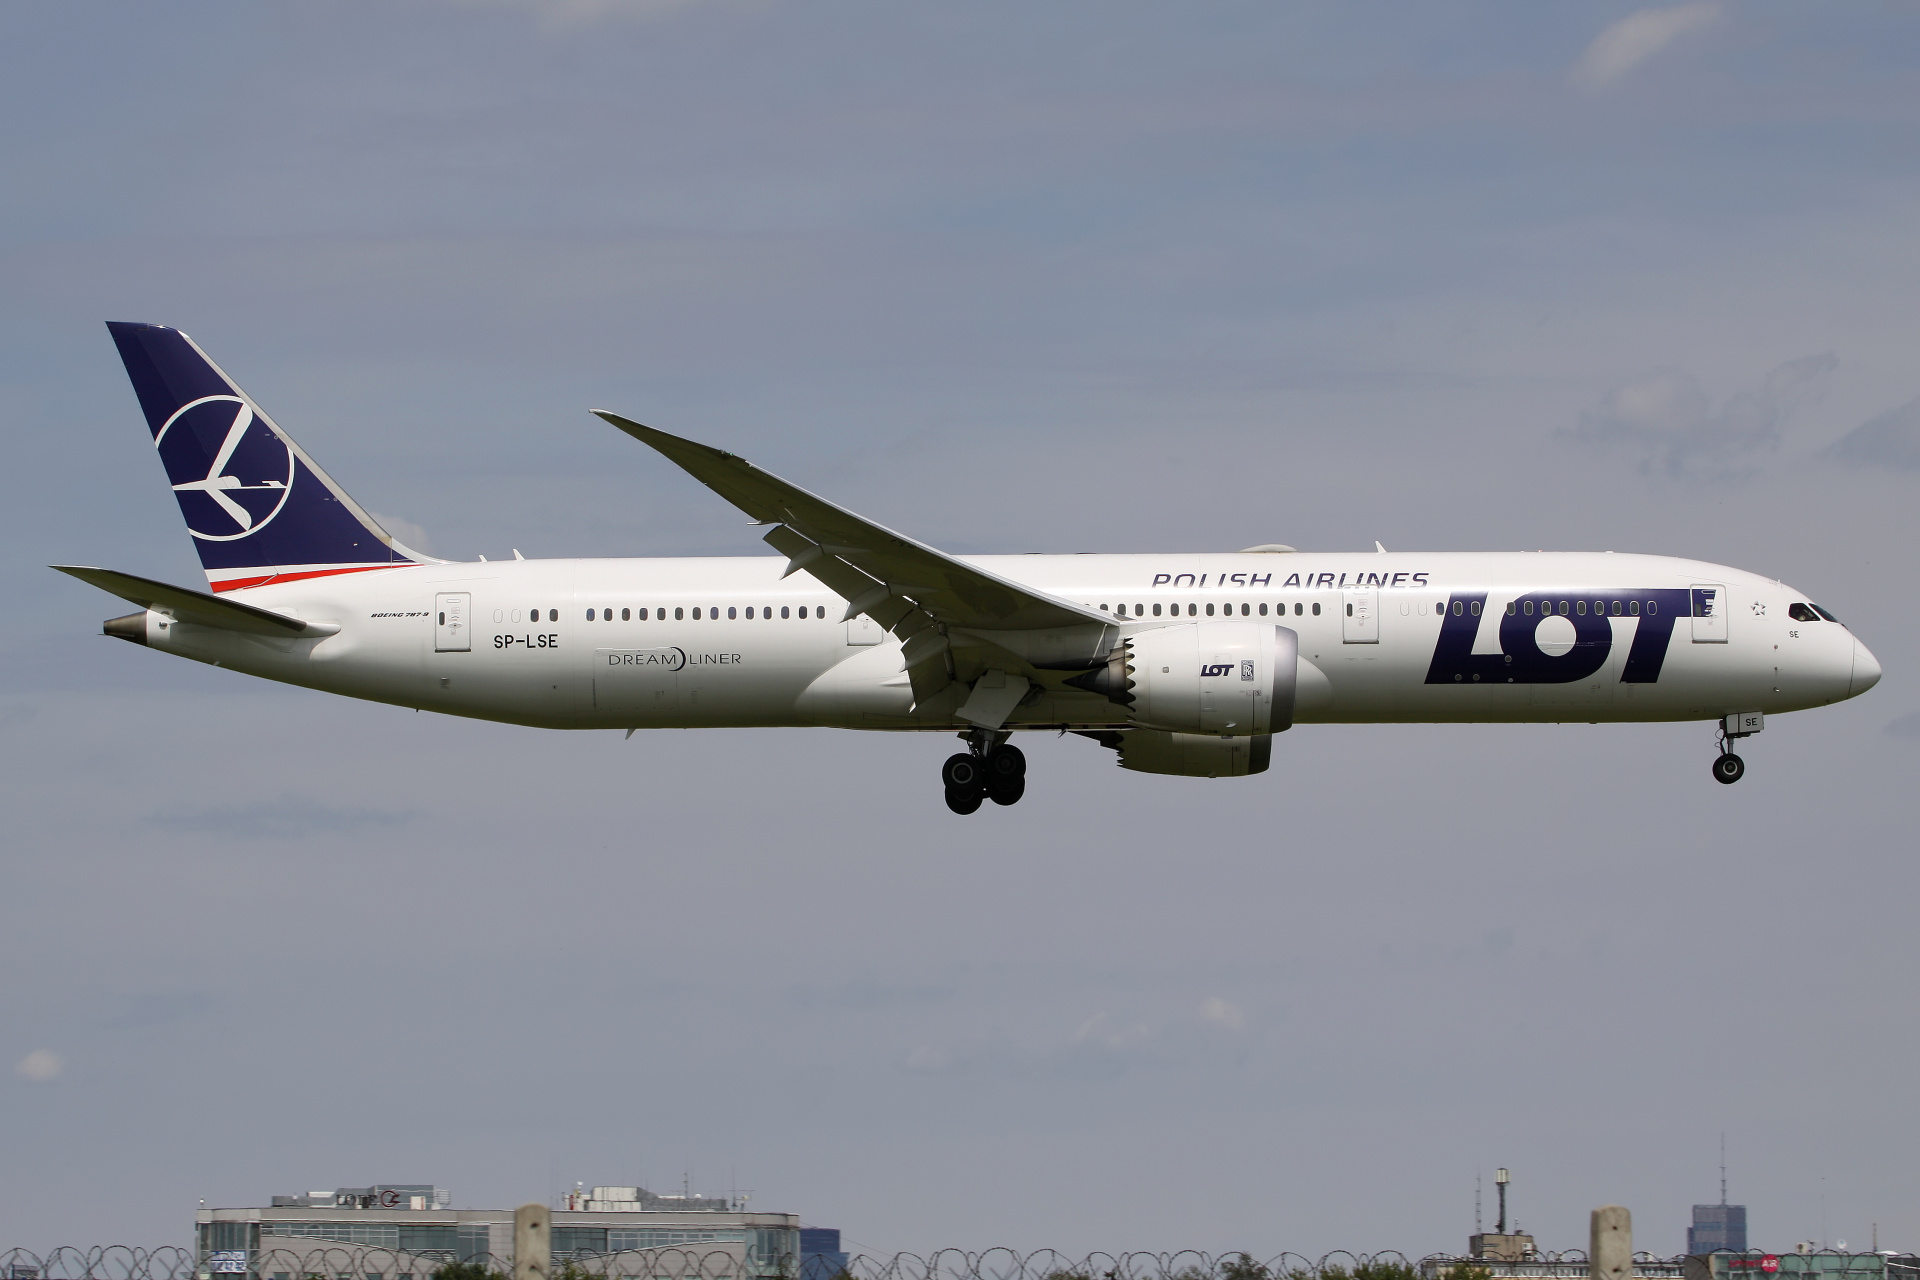 SP-LSE (Aircraft » EPWA Spotting » Boeing 787-9 Dreamliner » LOT Polish Airlines)